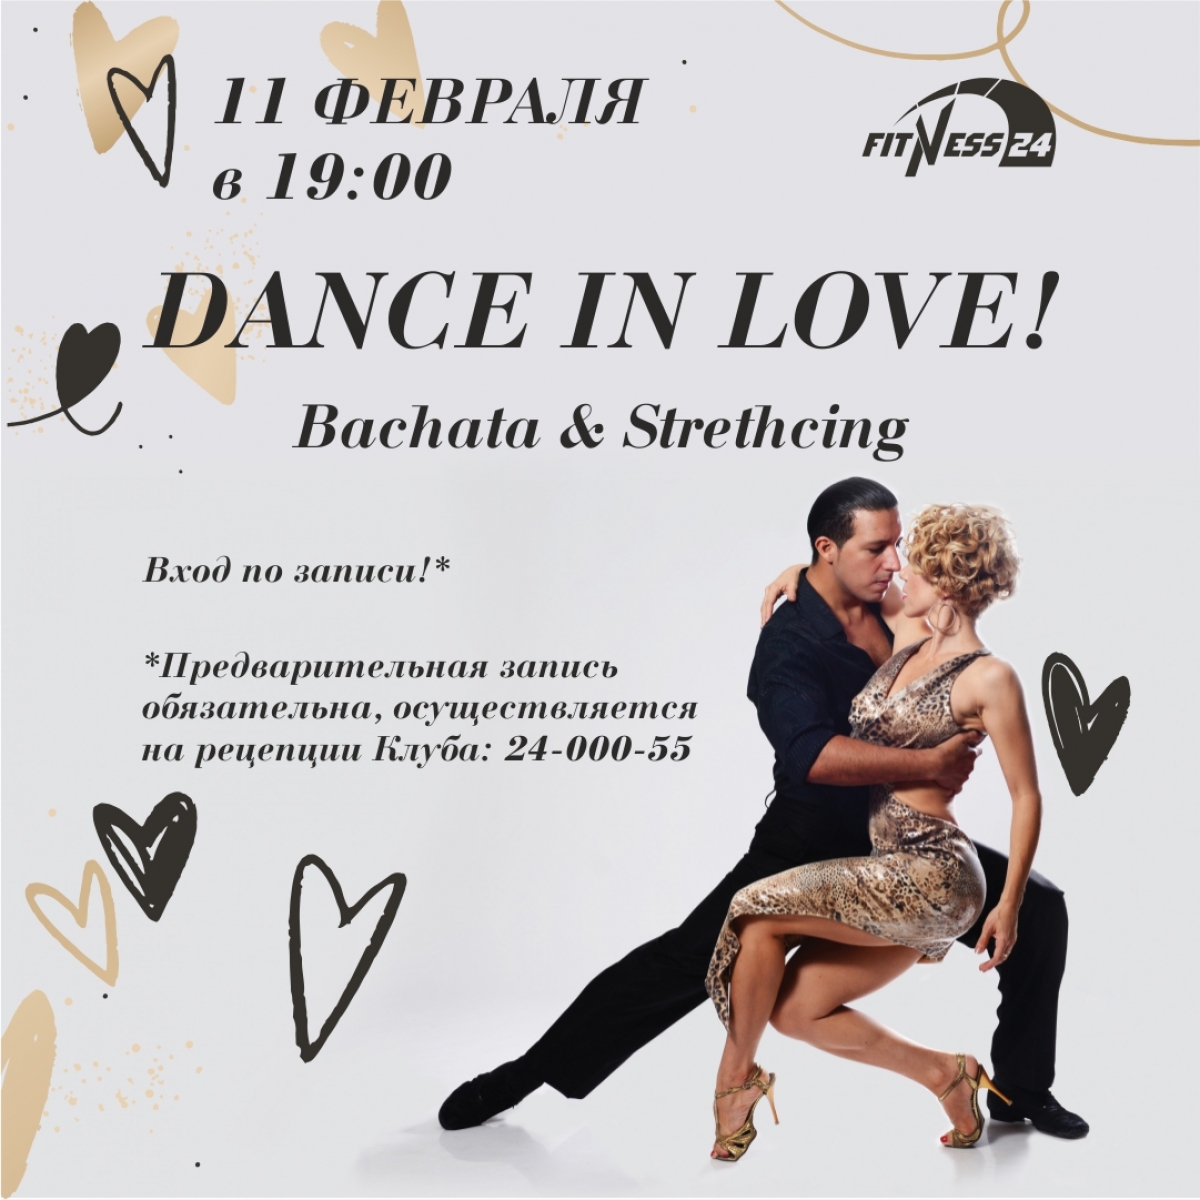 DANCE IN LOVE! Bachata & Strethcing в Fitness24 Лиговский!